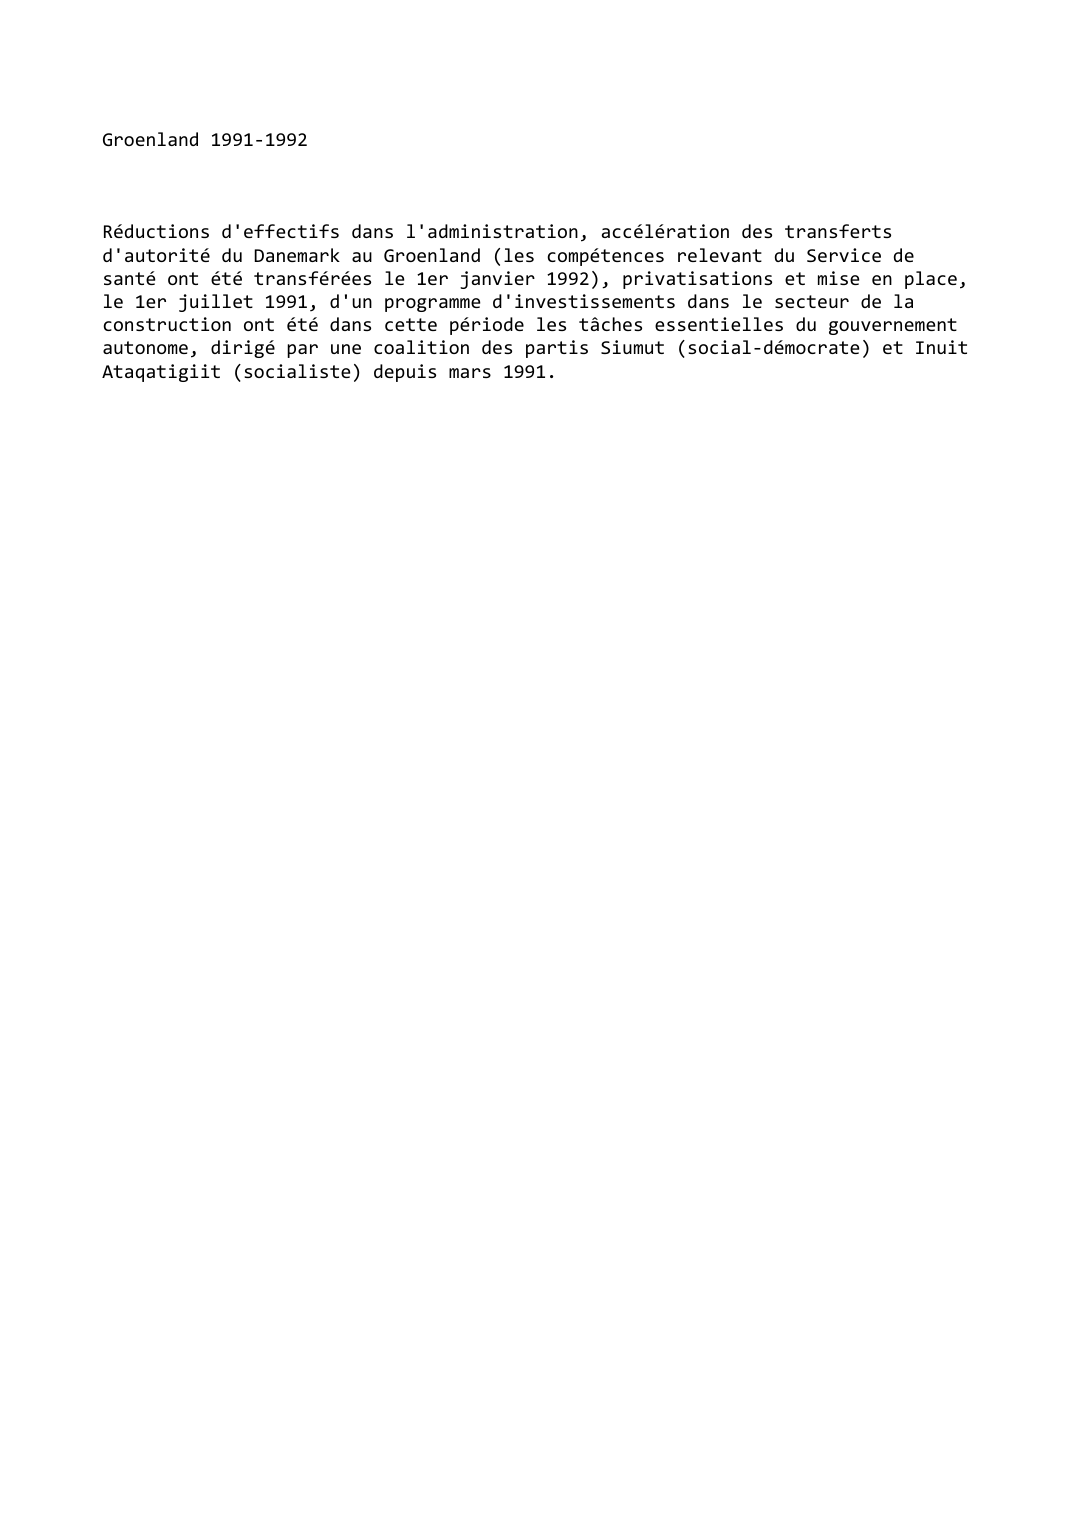 Prévisualisation du document Groenland (1991-1992)